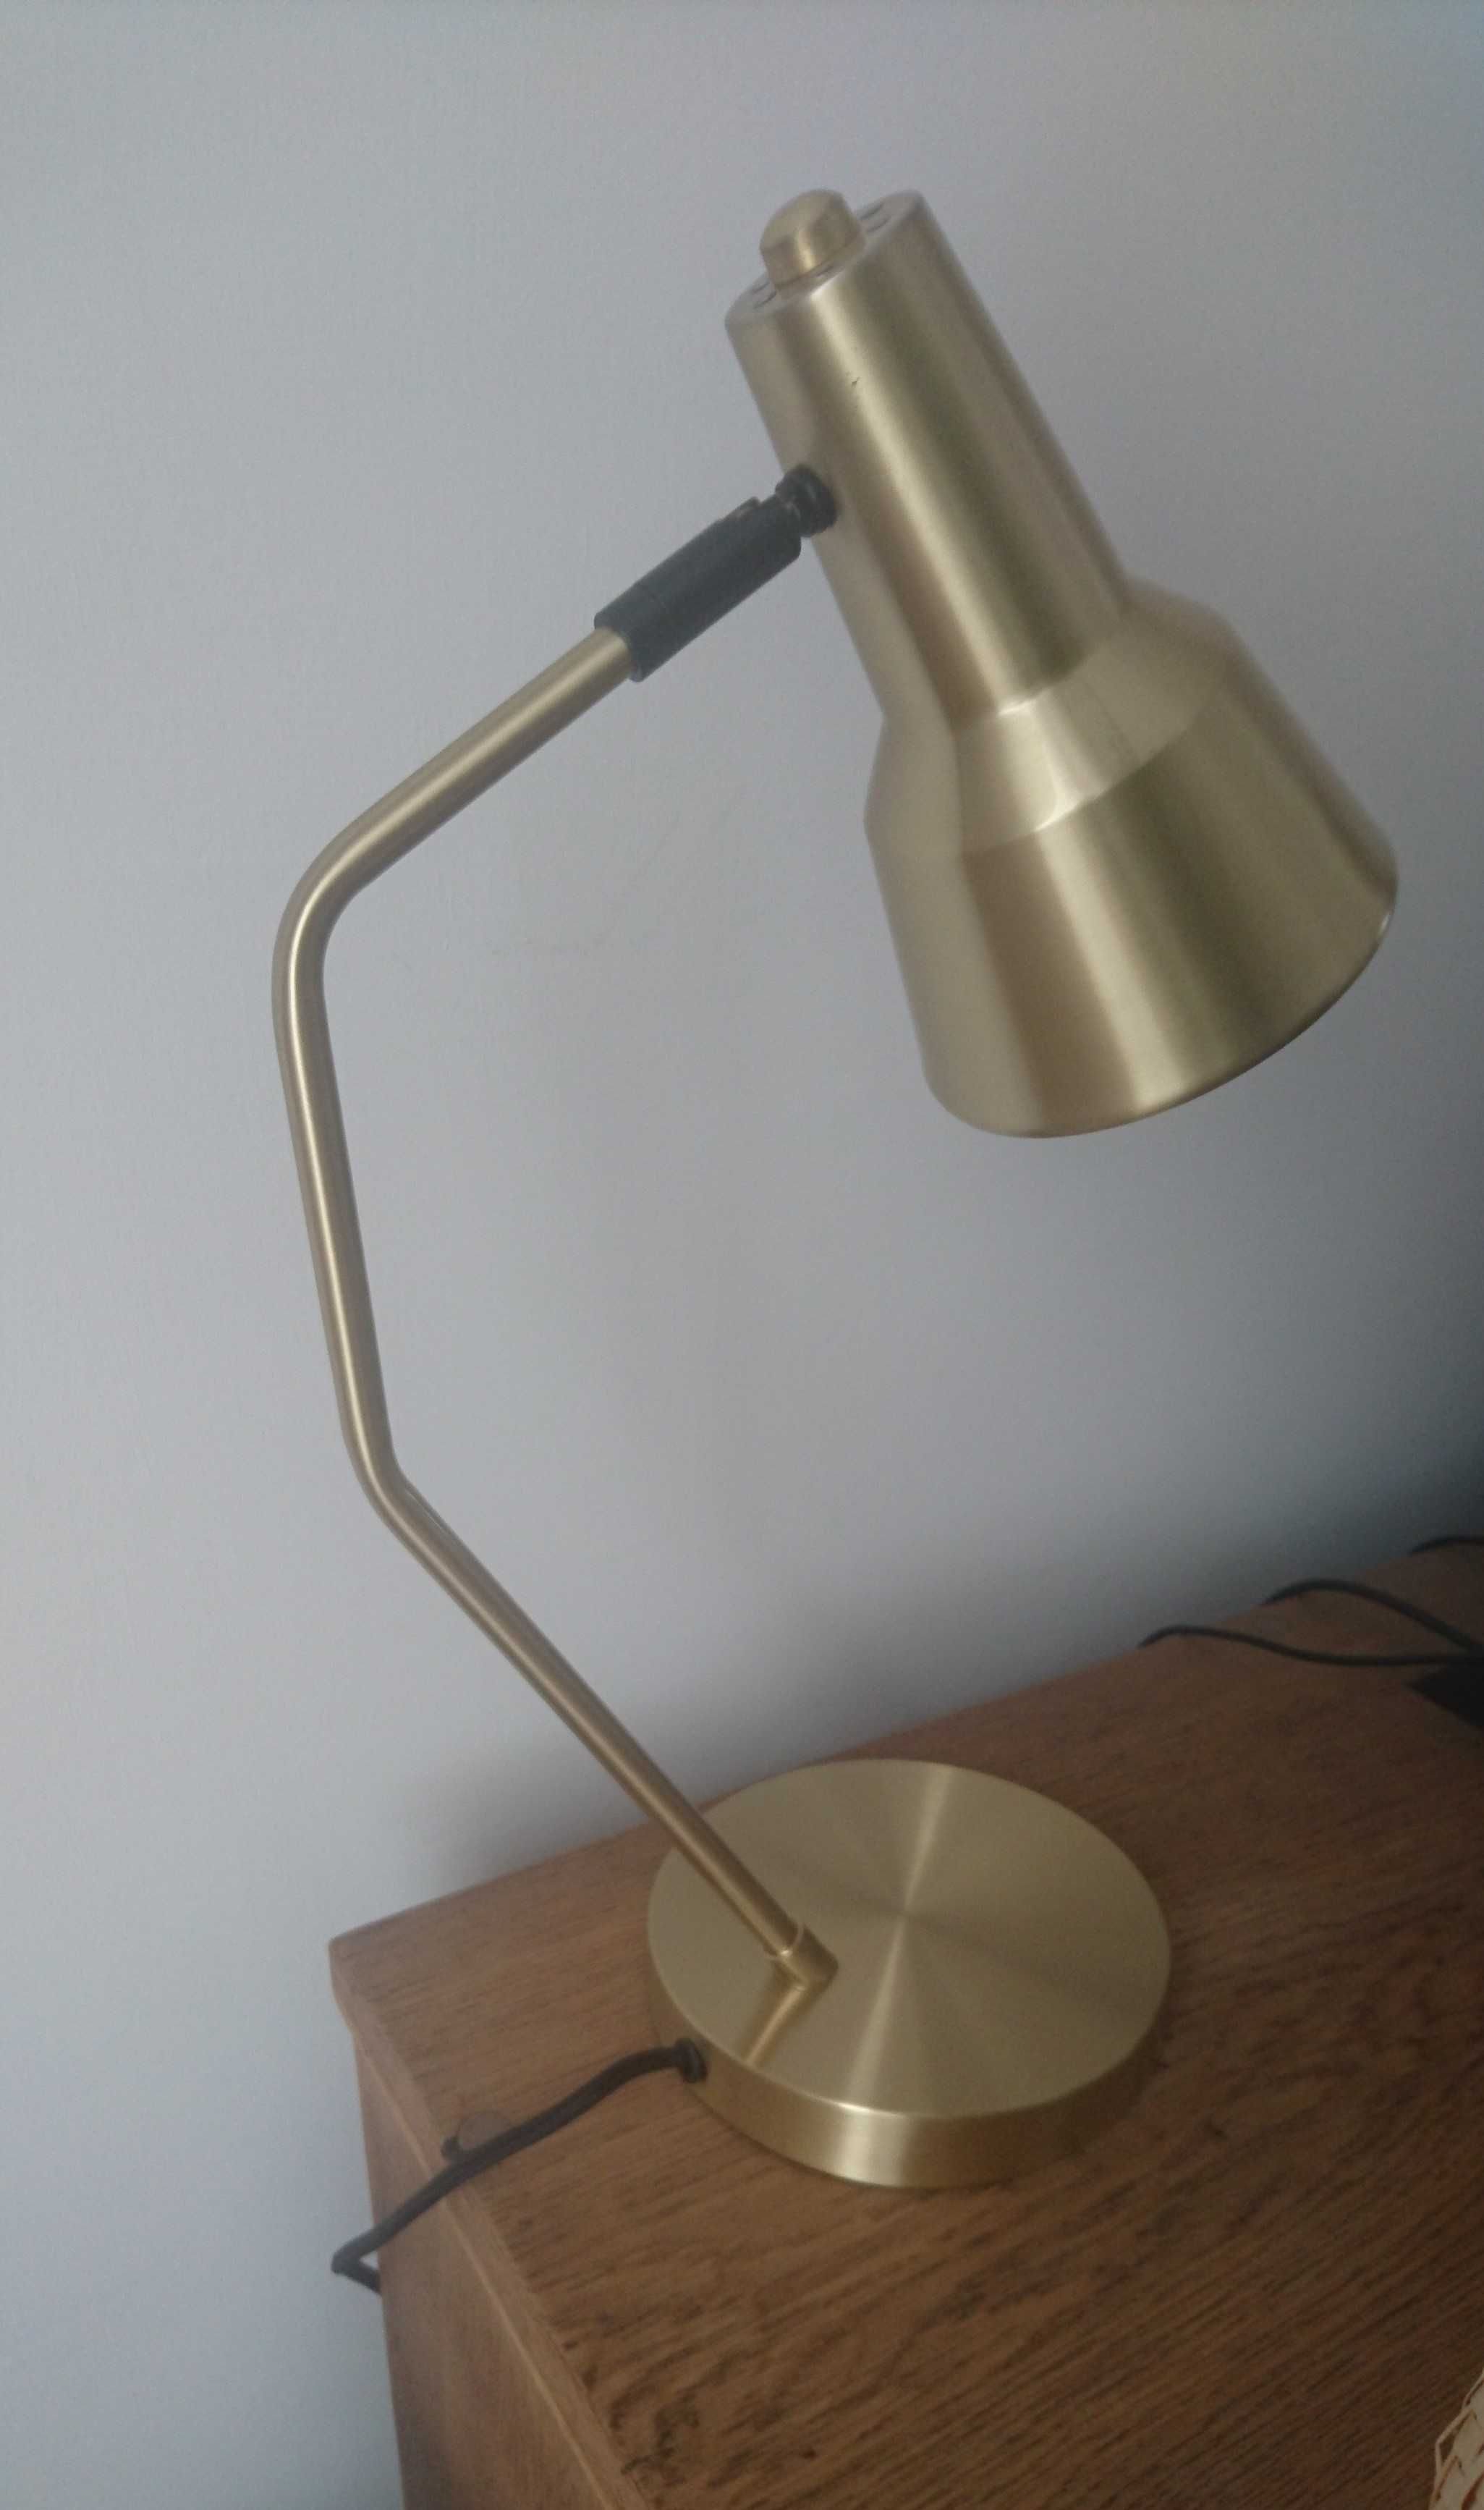 Nowa złota lampa biurkowa Valencia - OKAZJA!